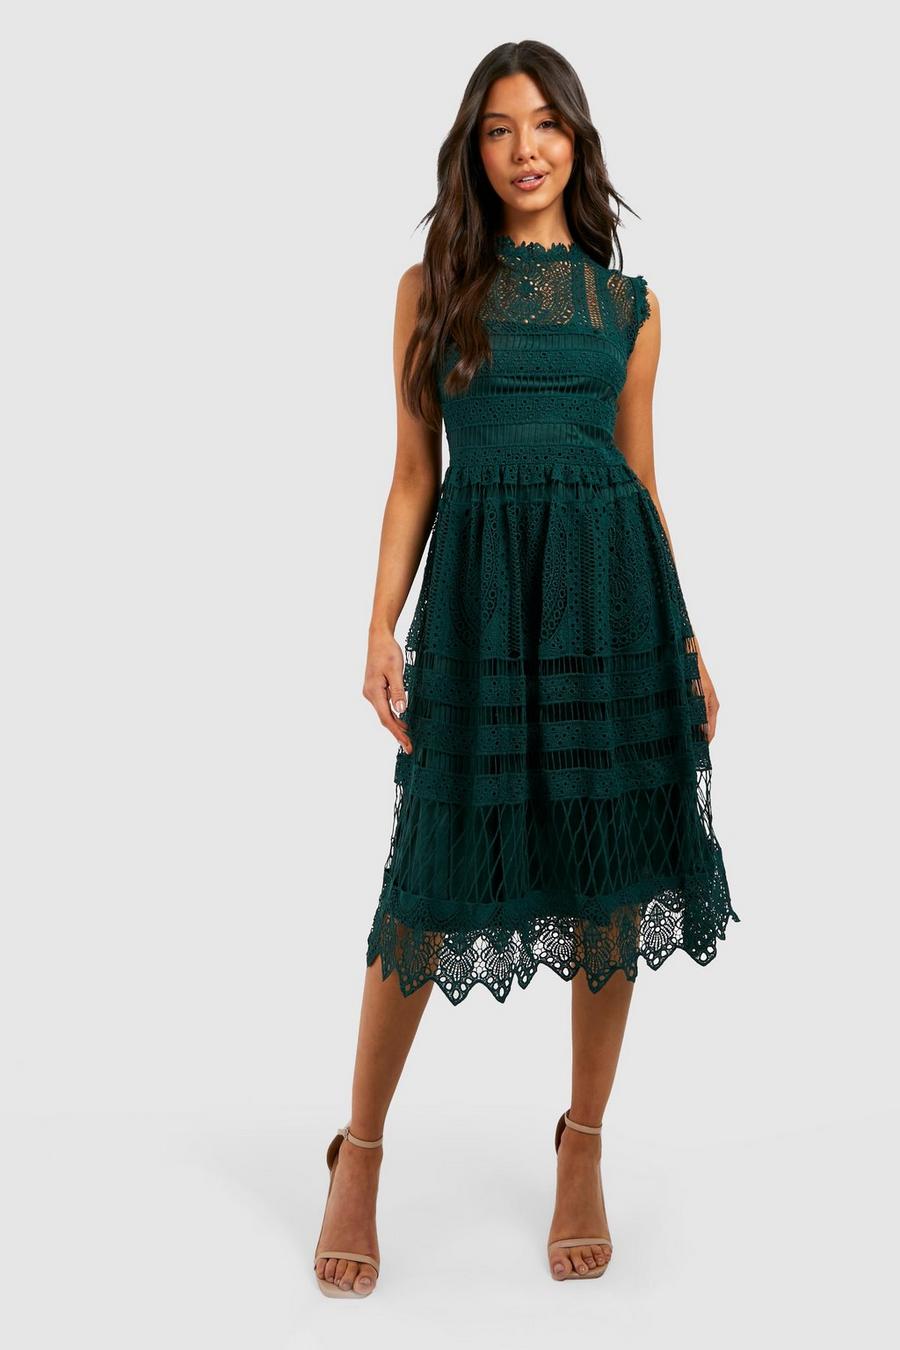 Emerald green Boutique Lace Skater Bridesmaid Dress